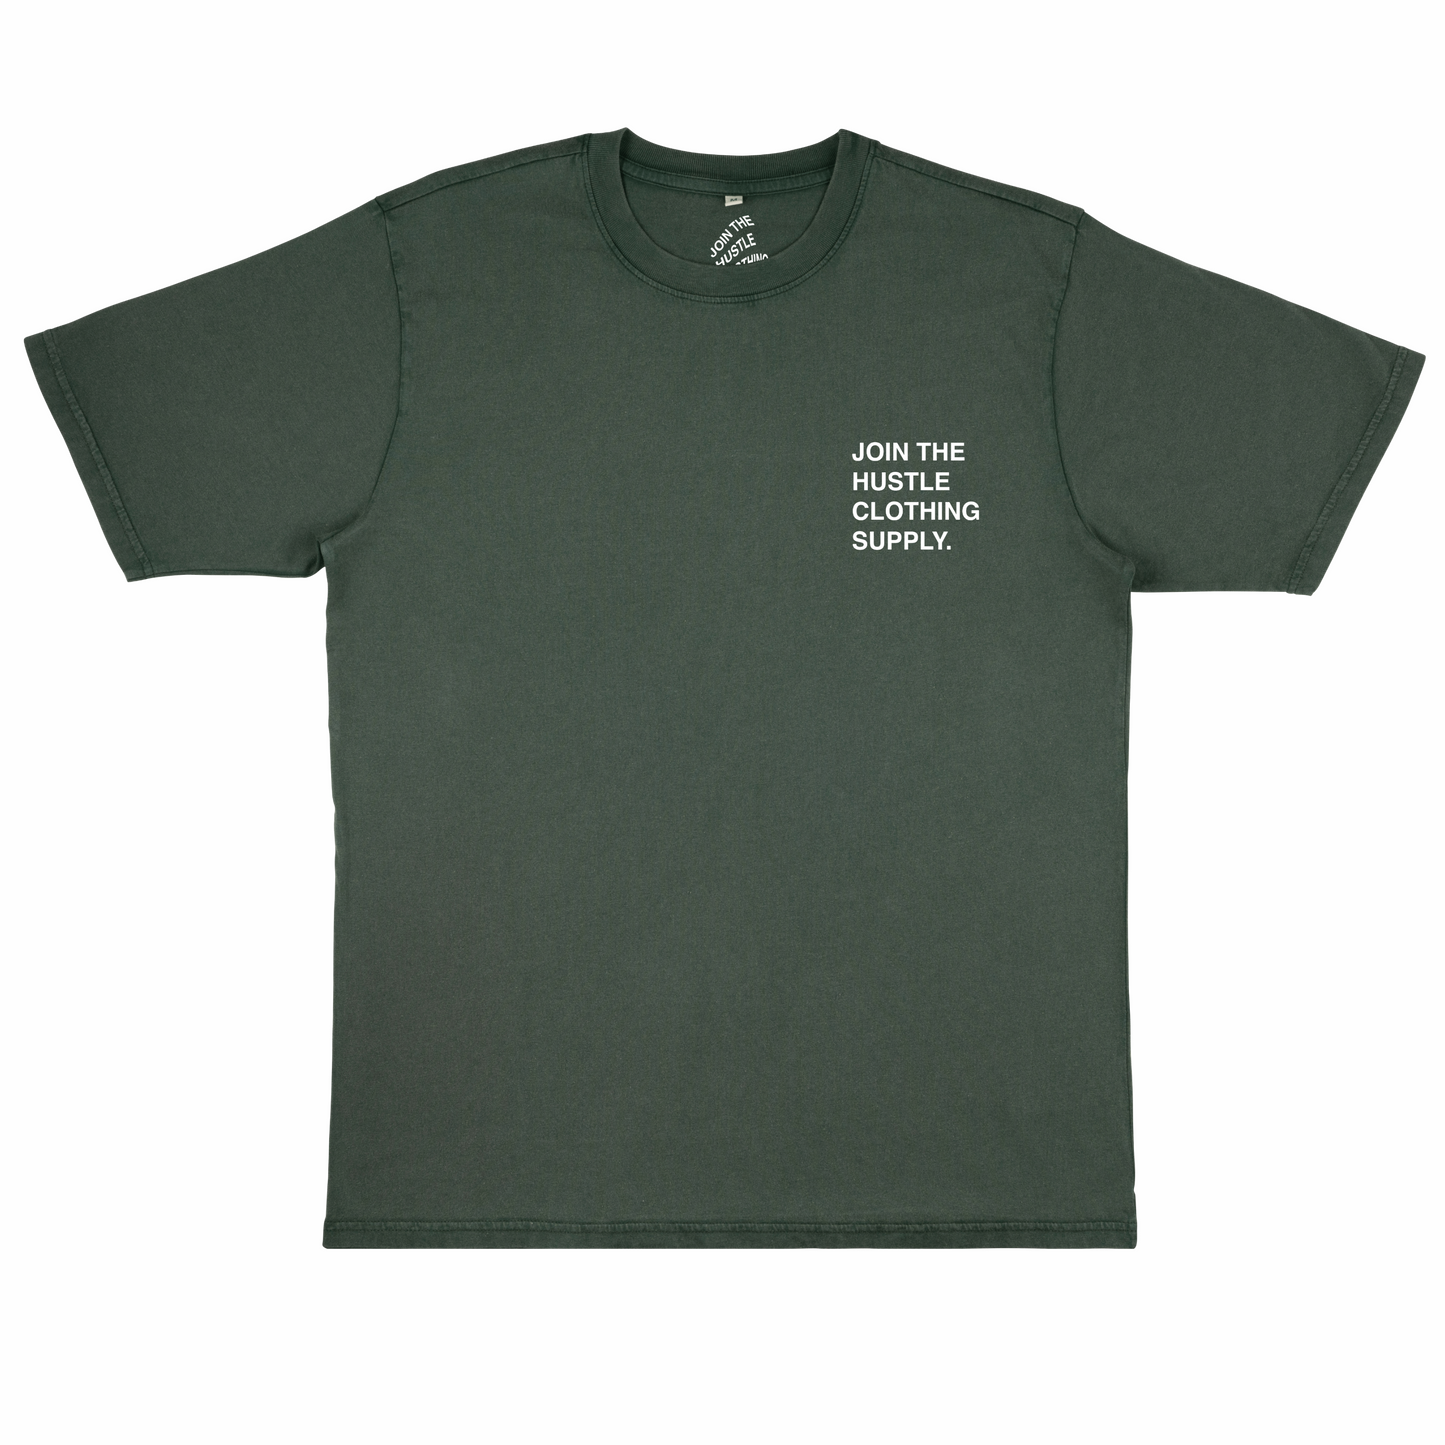 Stone Wash Green Box T-Shirt